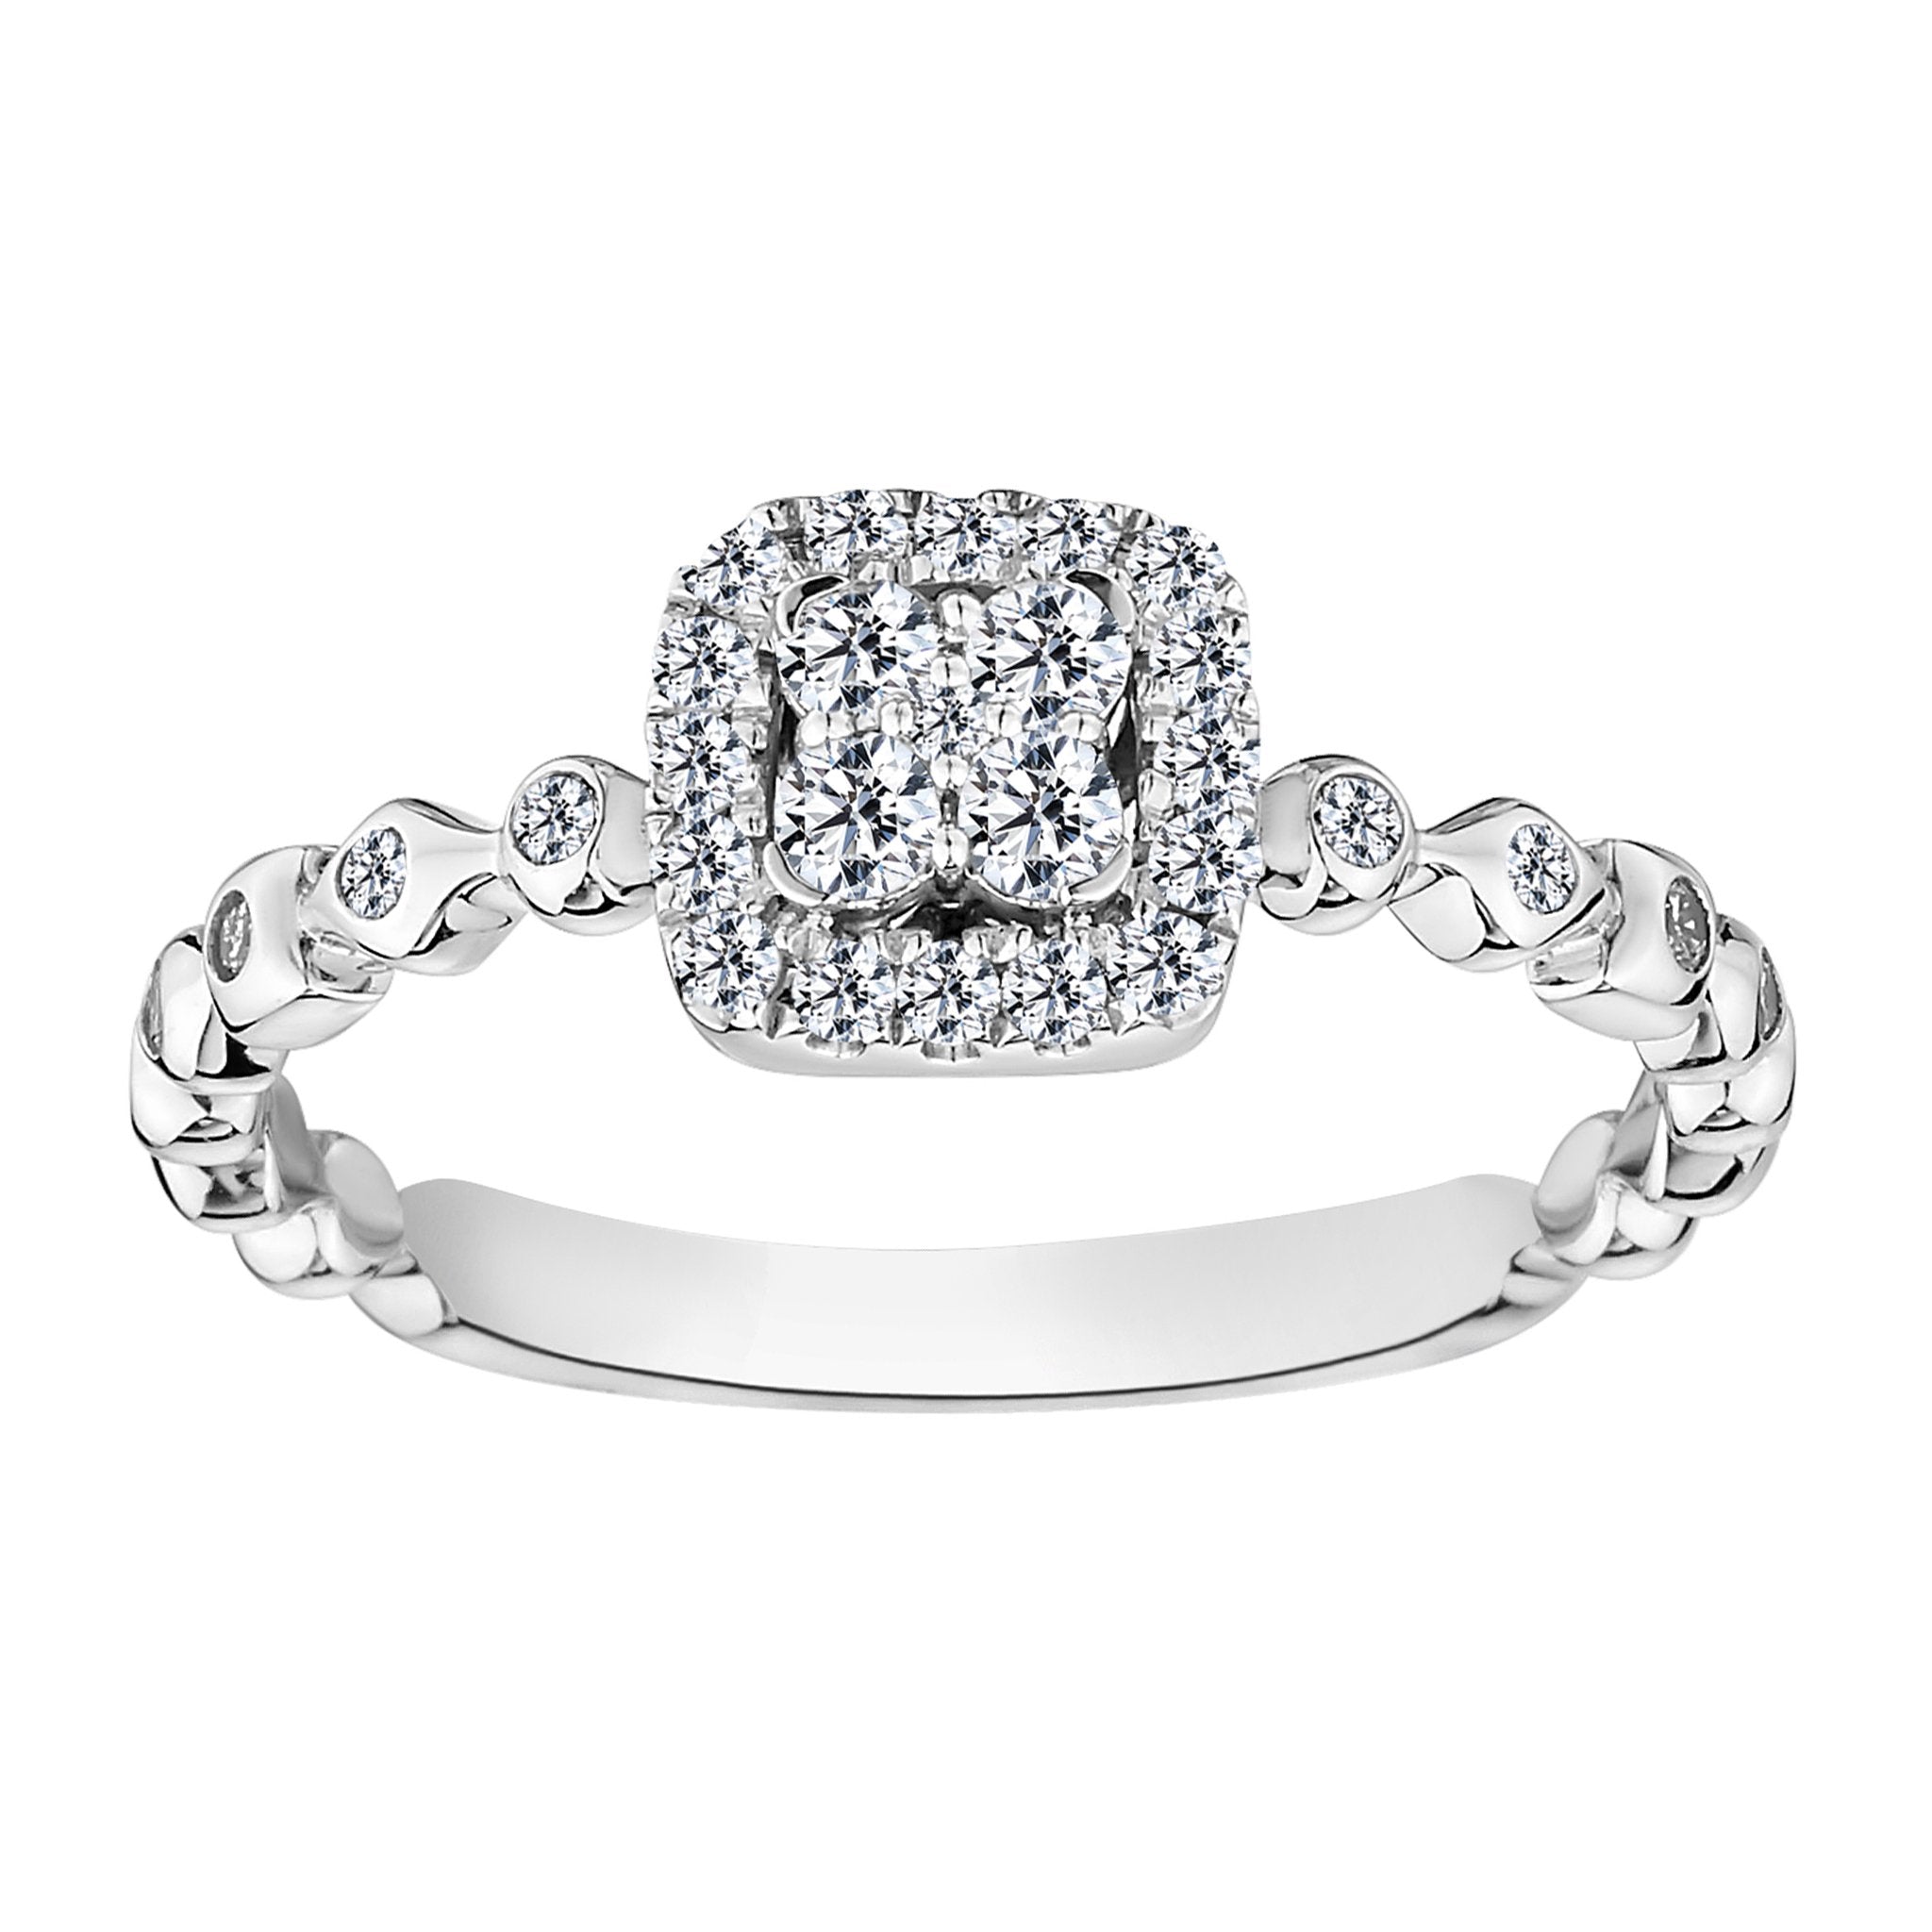 .33 Carat Diamond Ring,  10kt White Gold. Griffin Jewellery Designs